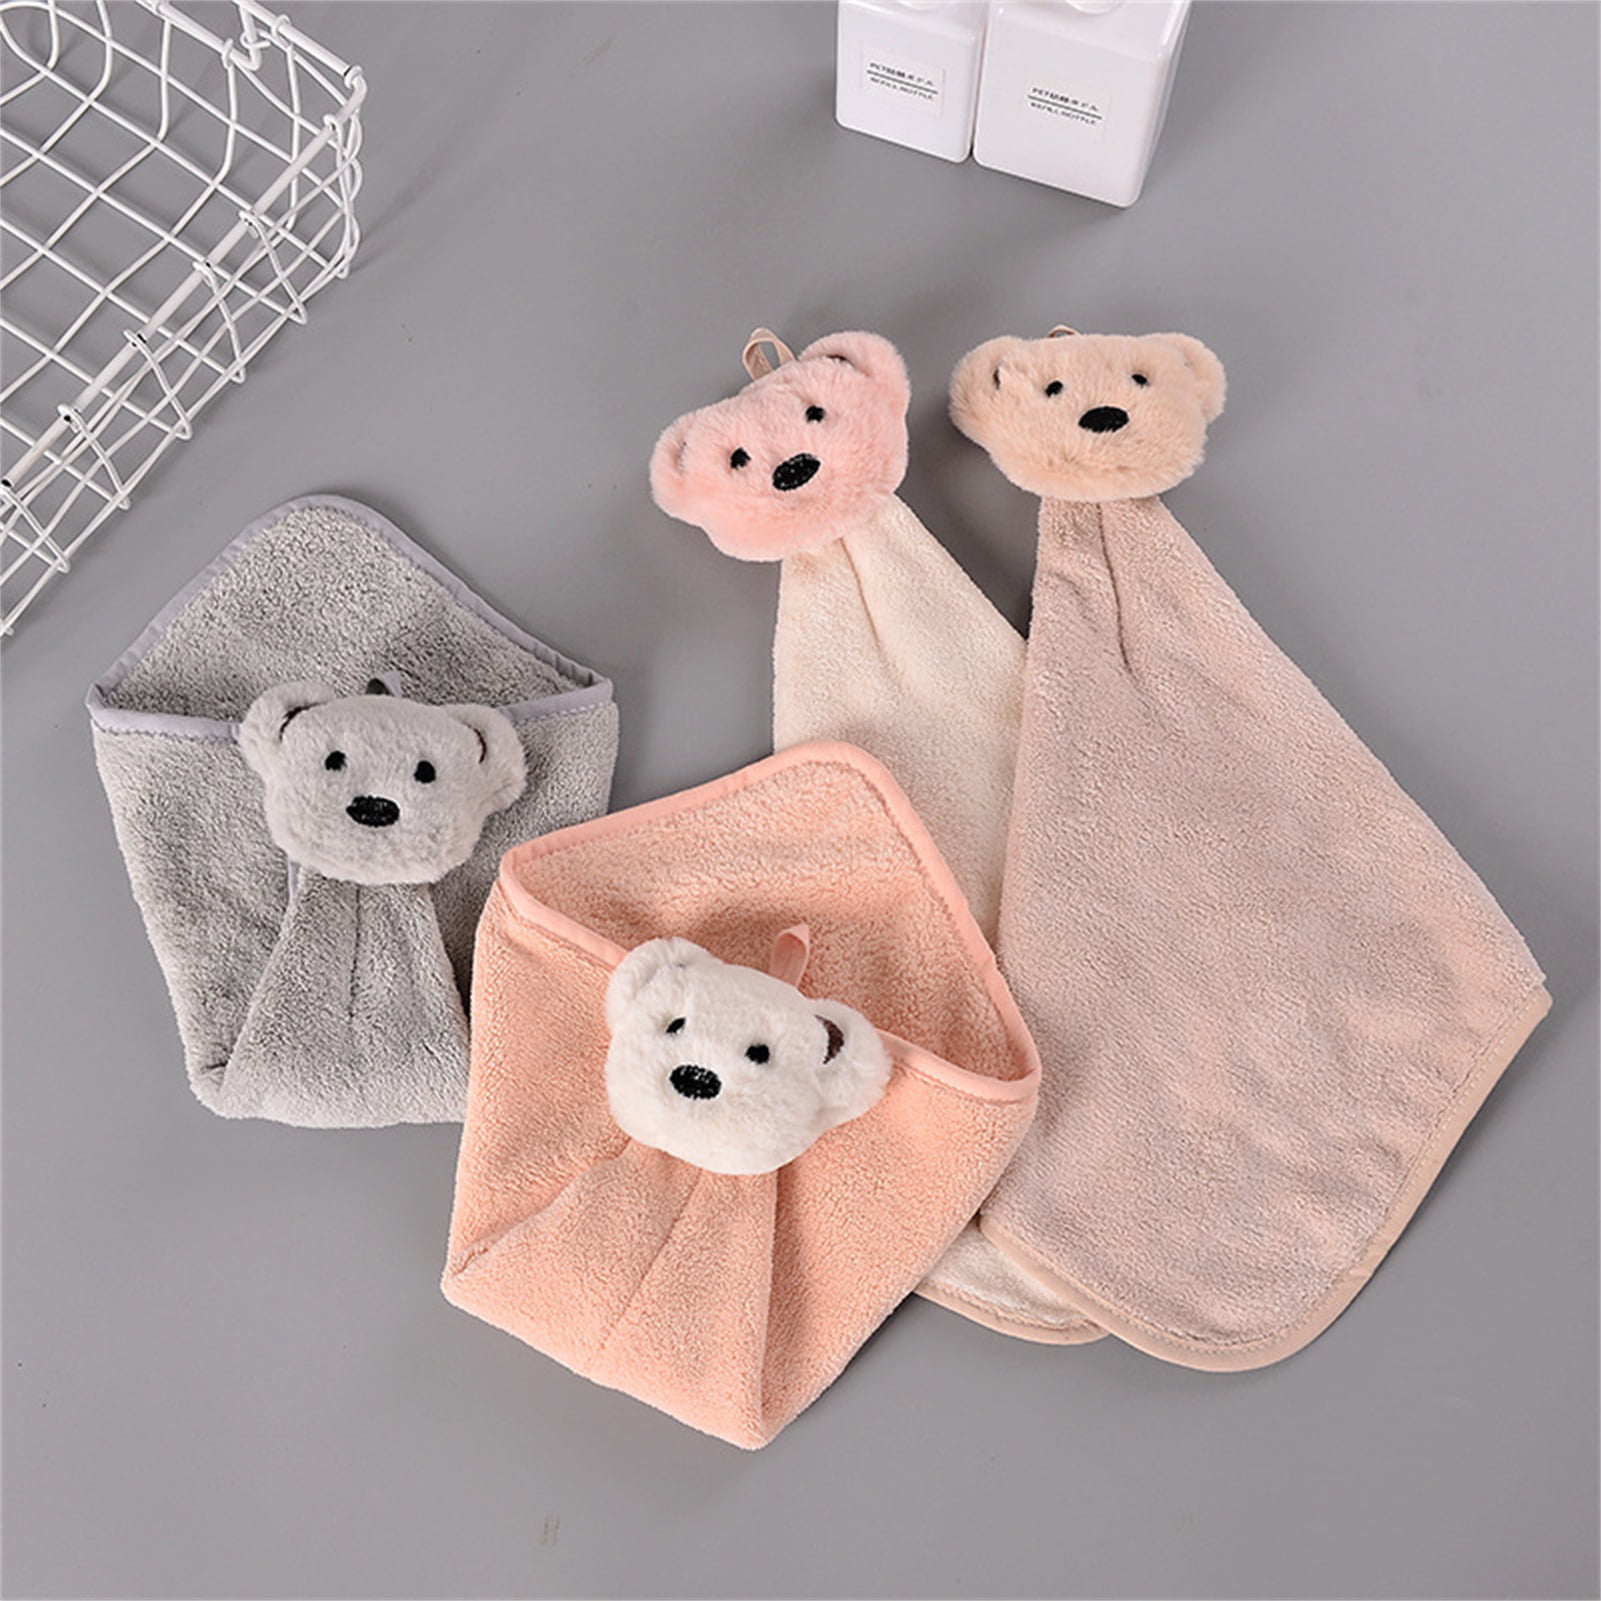 Bear - naked - cabin - lake house - Hand Towel - Bathroom - Embroidered  towel - Bathroom Hand Towel - funny bathroom - bathroom Towel 